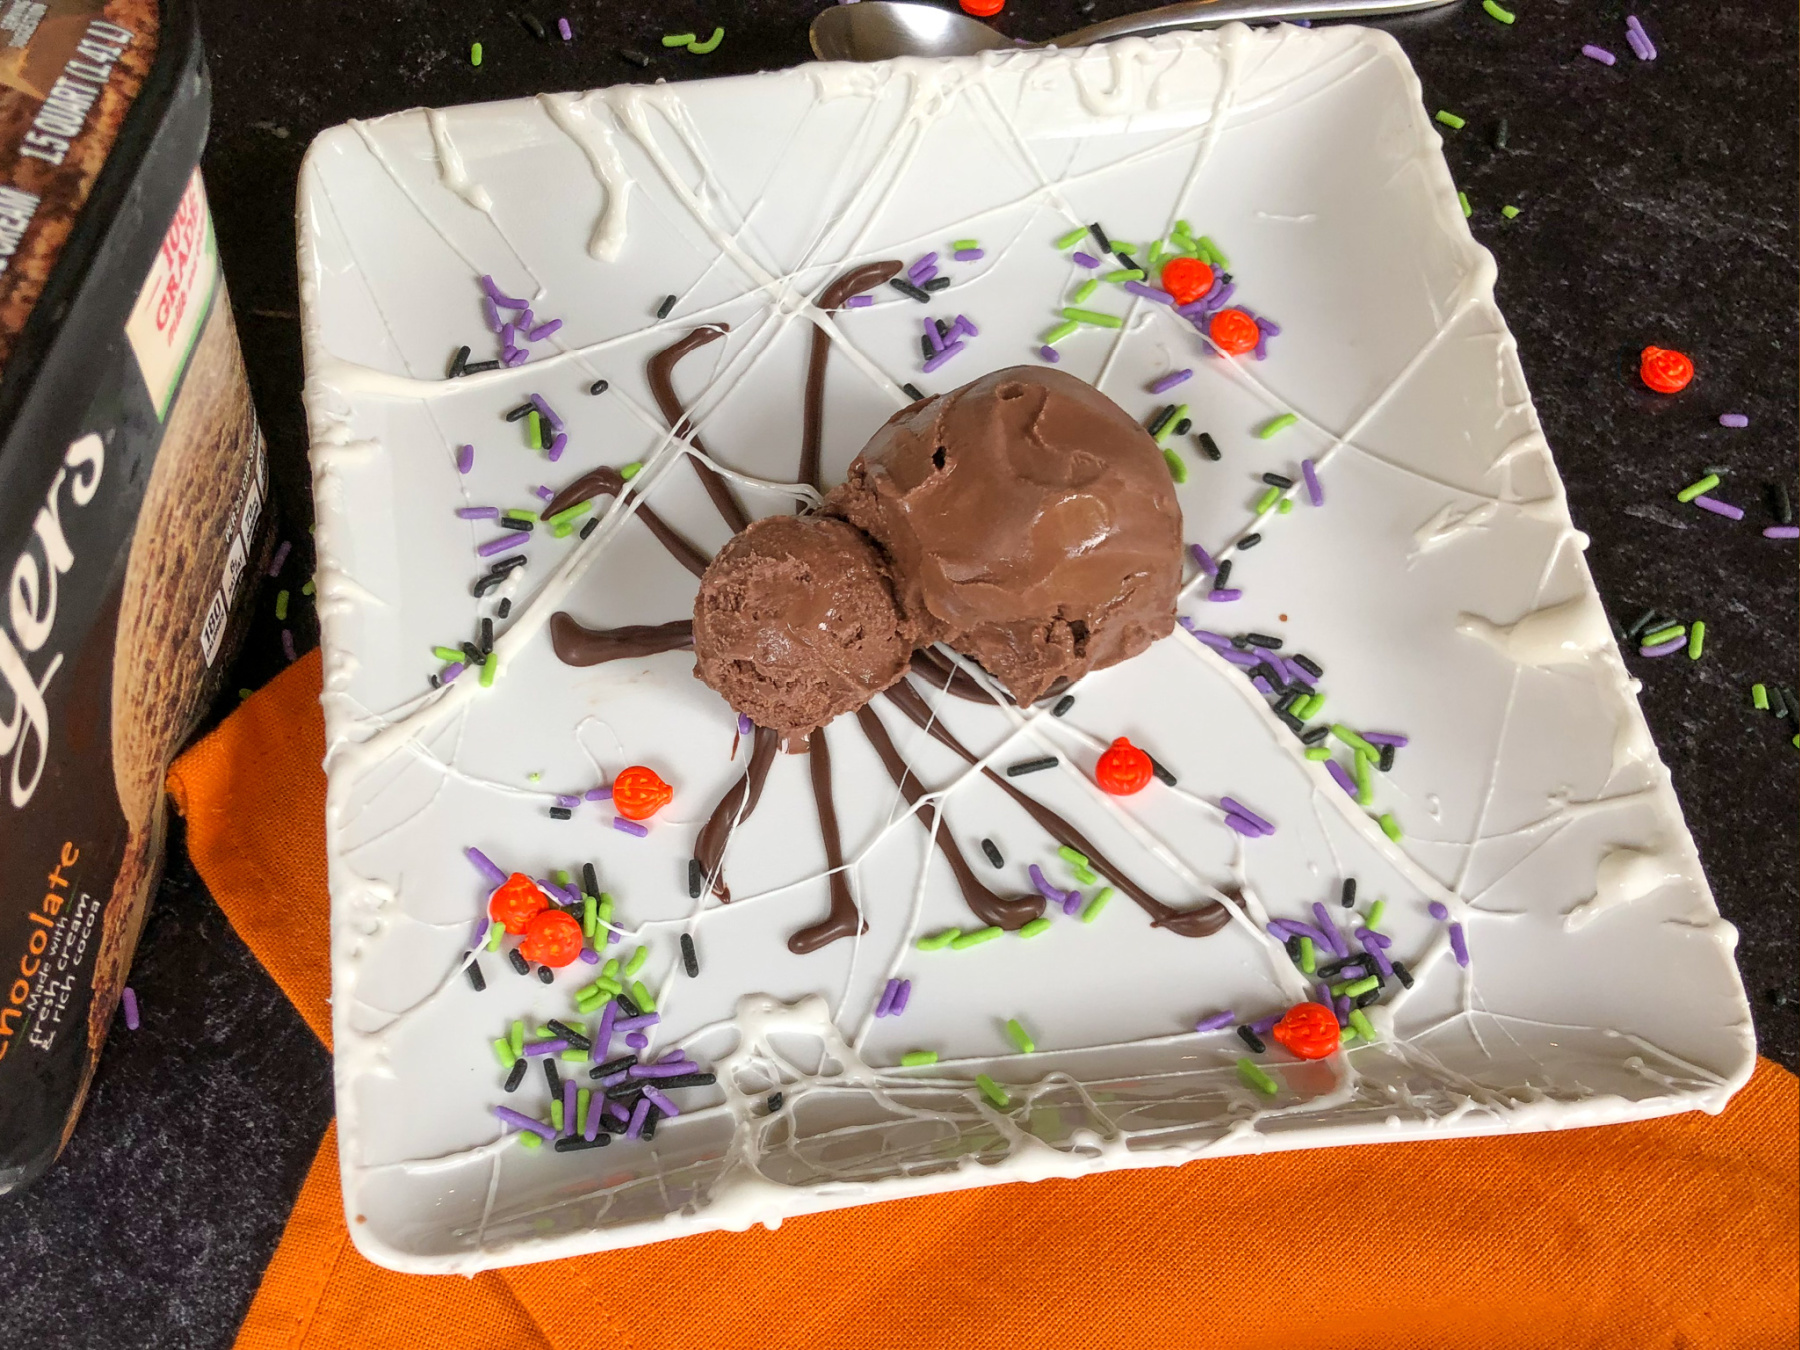 Serve Up A Fun Halloween Treat Using Breyers Ice Cream - On Sale BOGO At Publix! on I Heart Publix 3